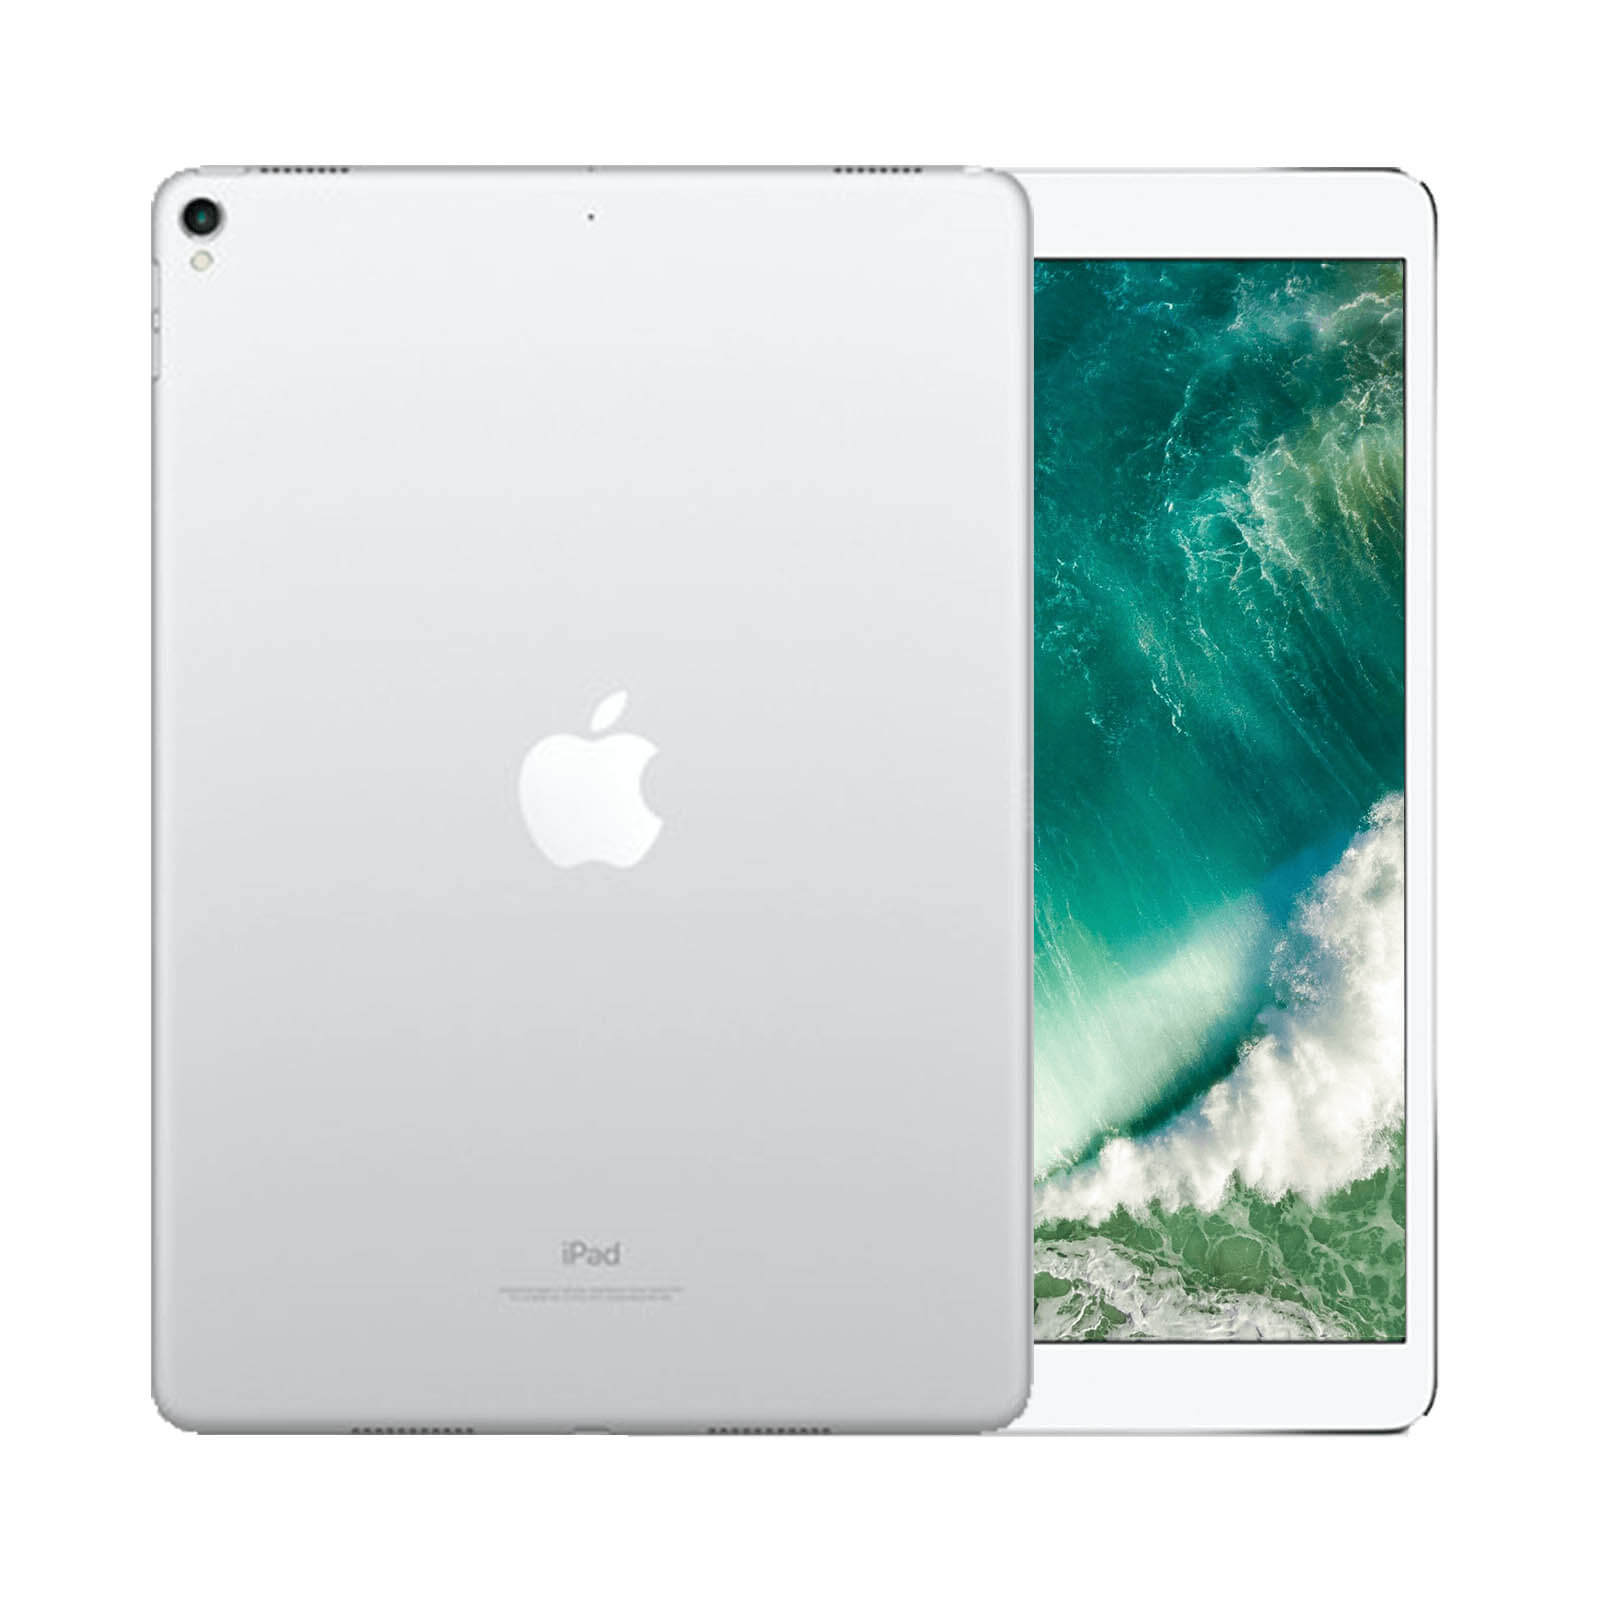 iPad Pro 11 Inch 256GB Space Grey Pristine - WiFi